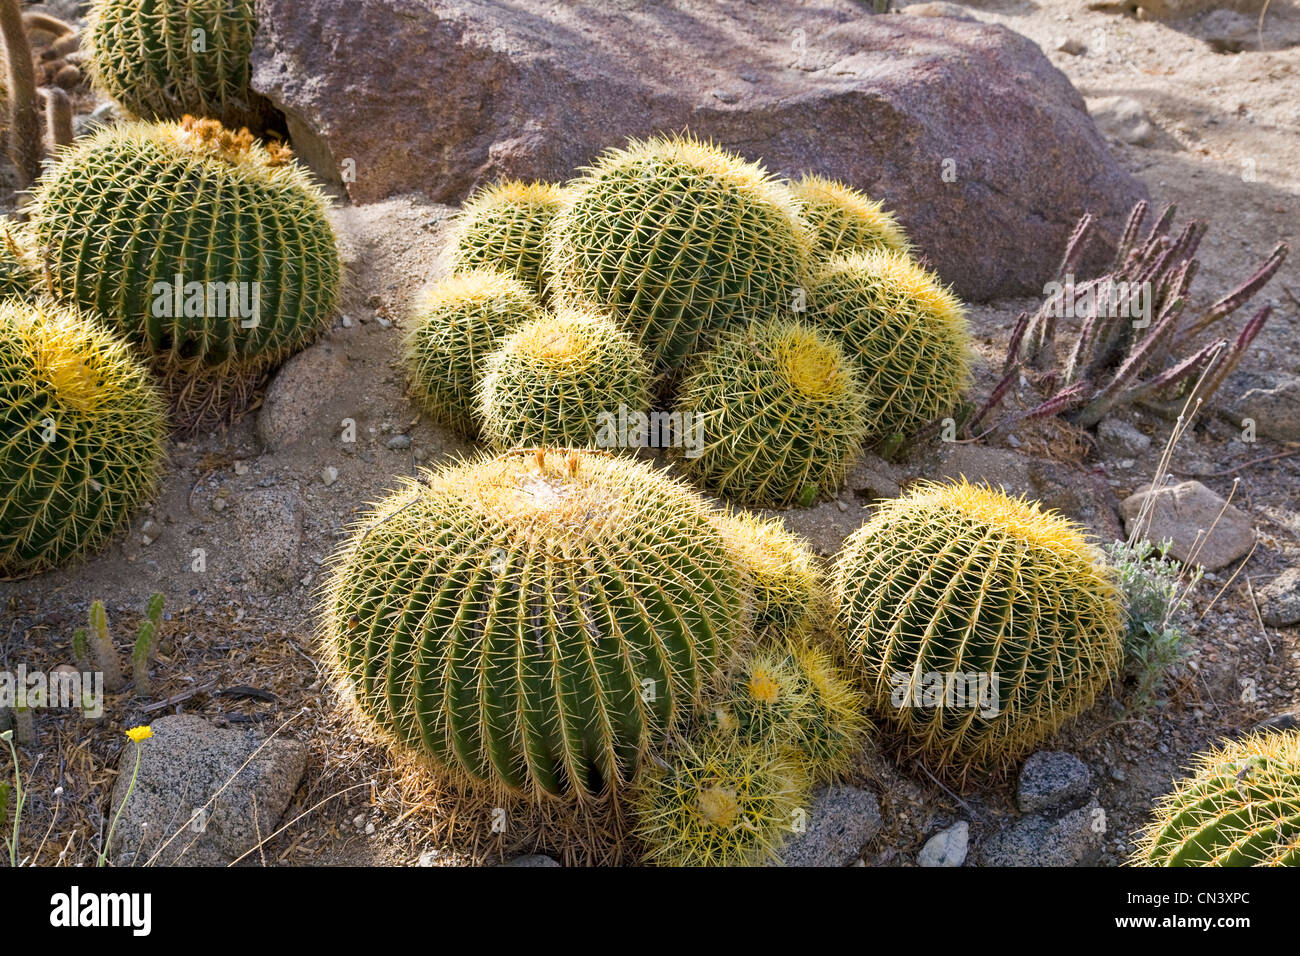 https://c8.alamy.com/comp/CN3XPC/barrel-or-fish-hook-cactus-found-in-the-sonora-desert-CN3XPC.jpg